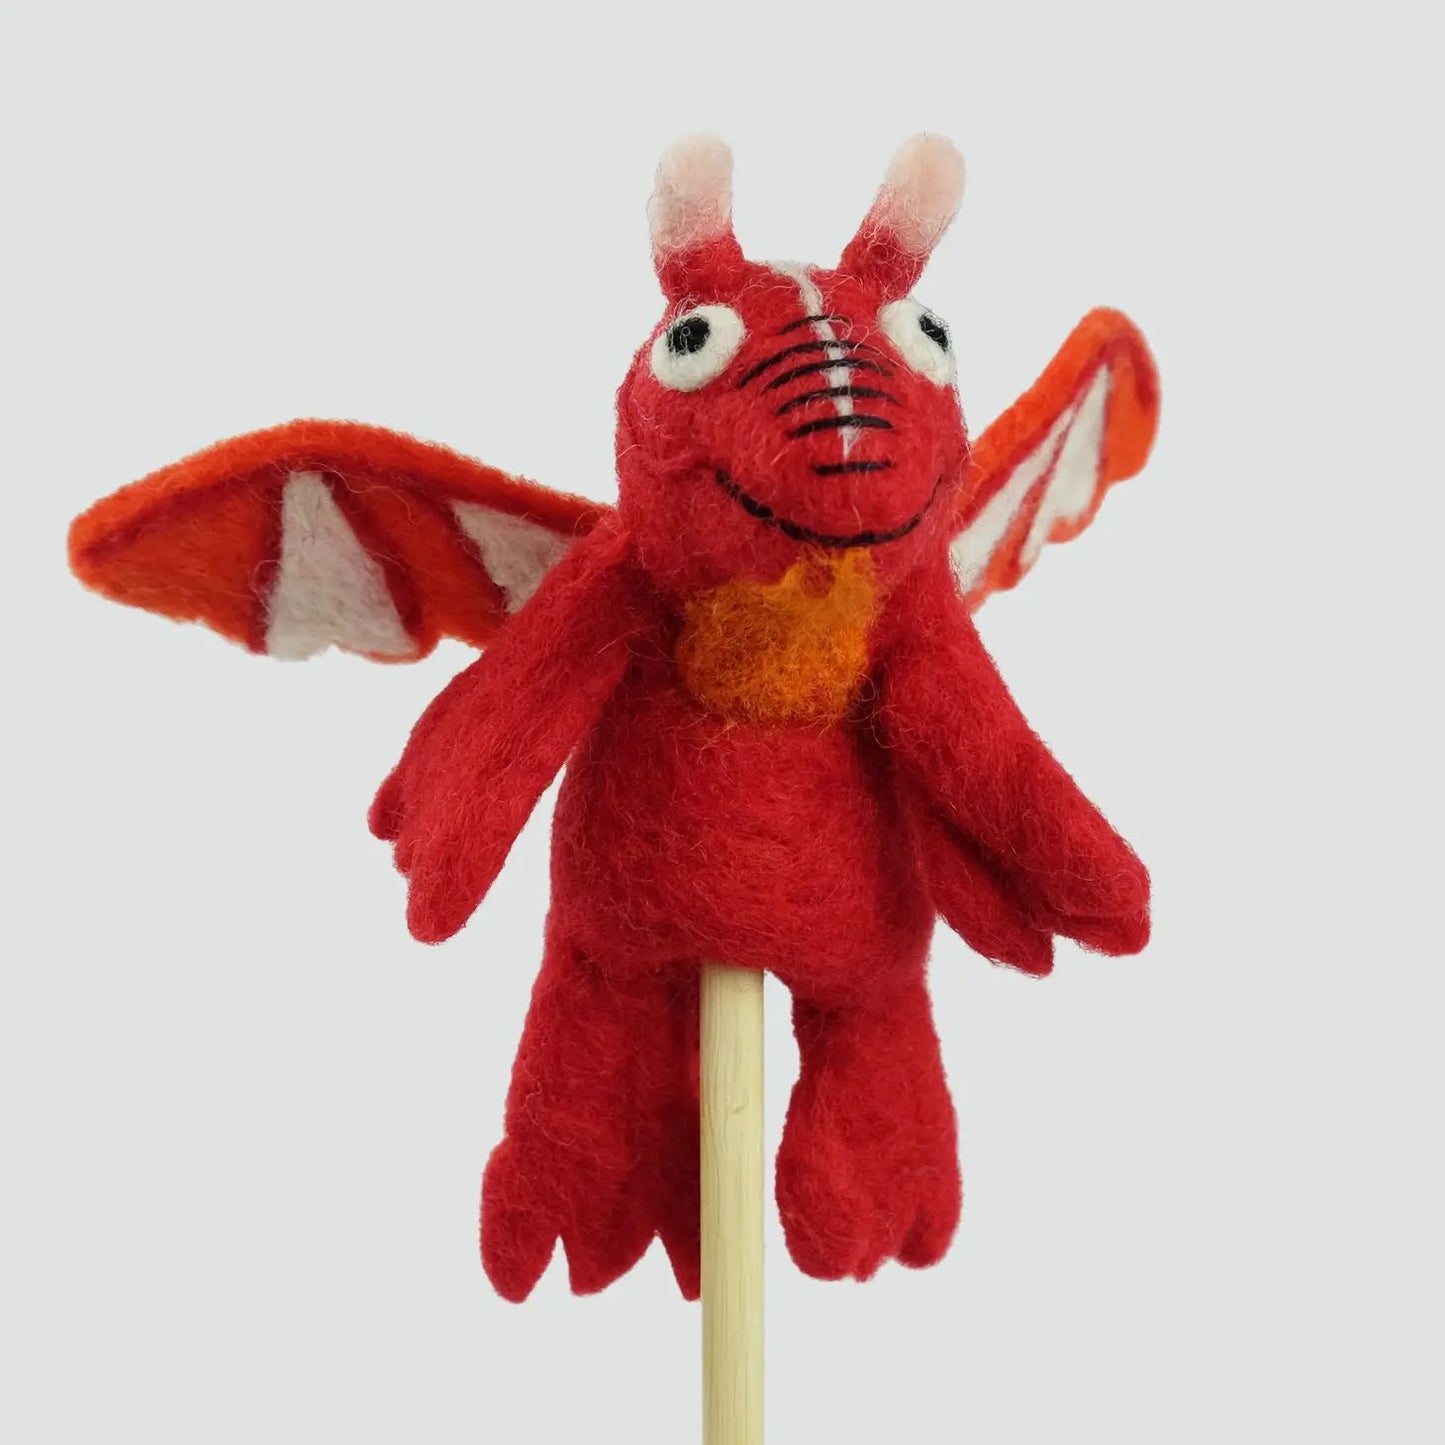 Wool Felt red dragon finger puppets